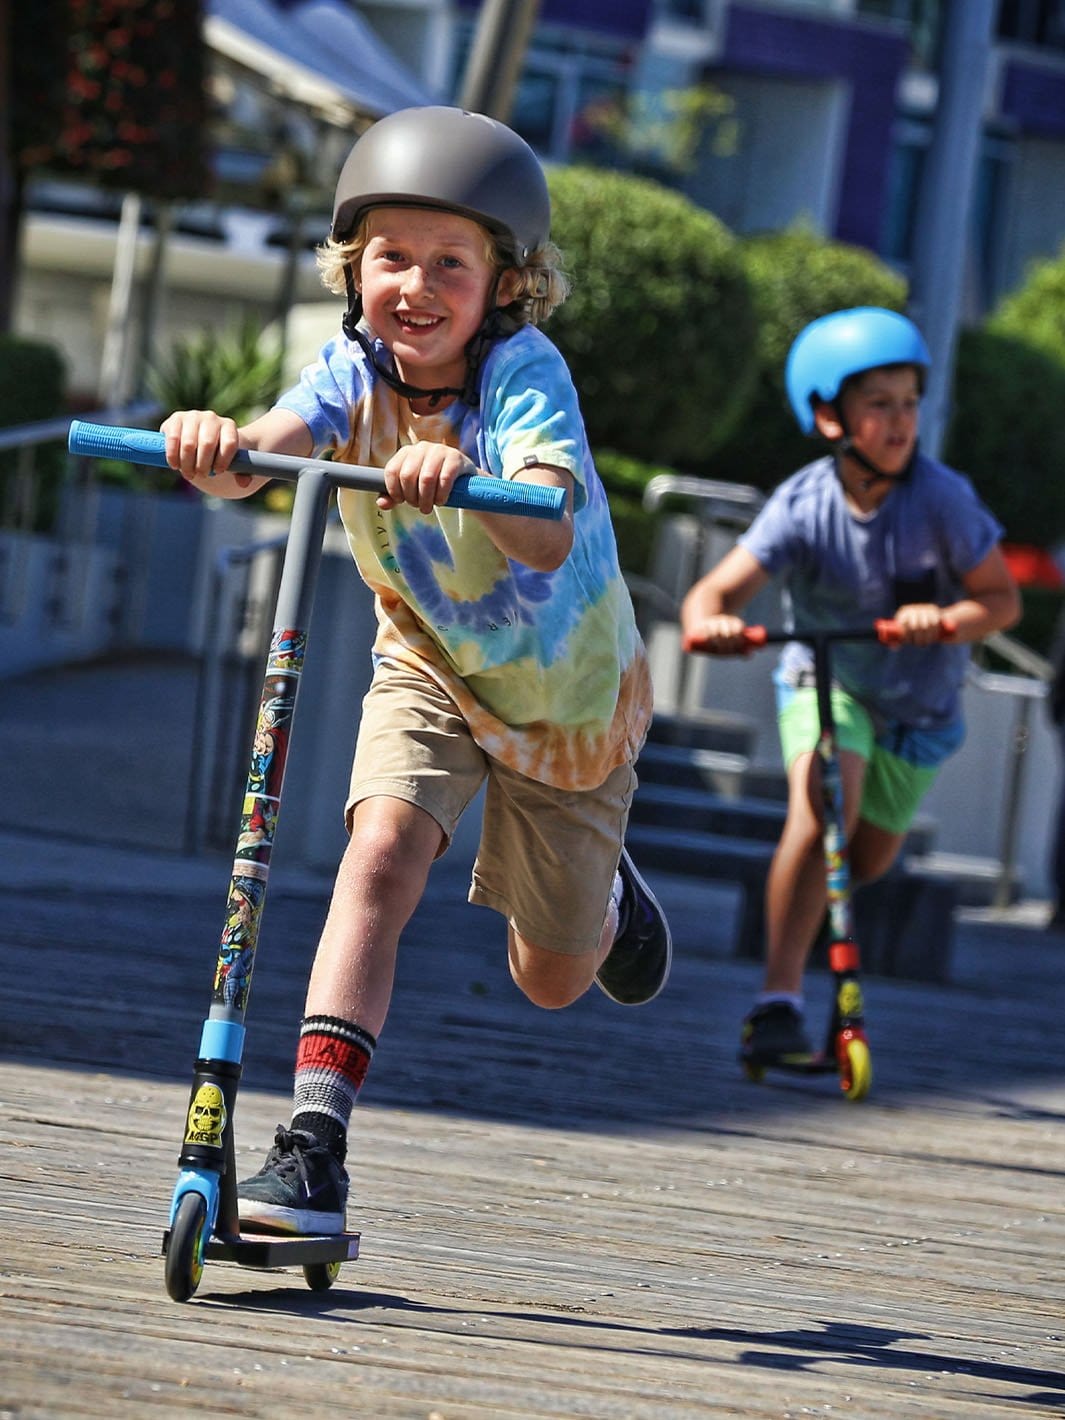 MAdd Gear MGP Pro Smooth Riding Skate Park Trick Stunts Kids Children